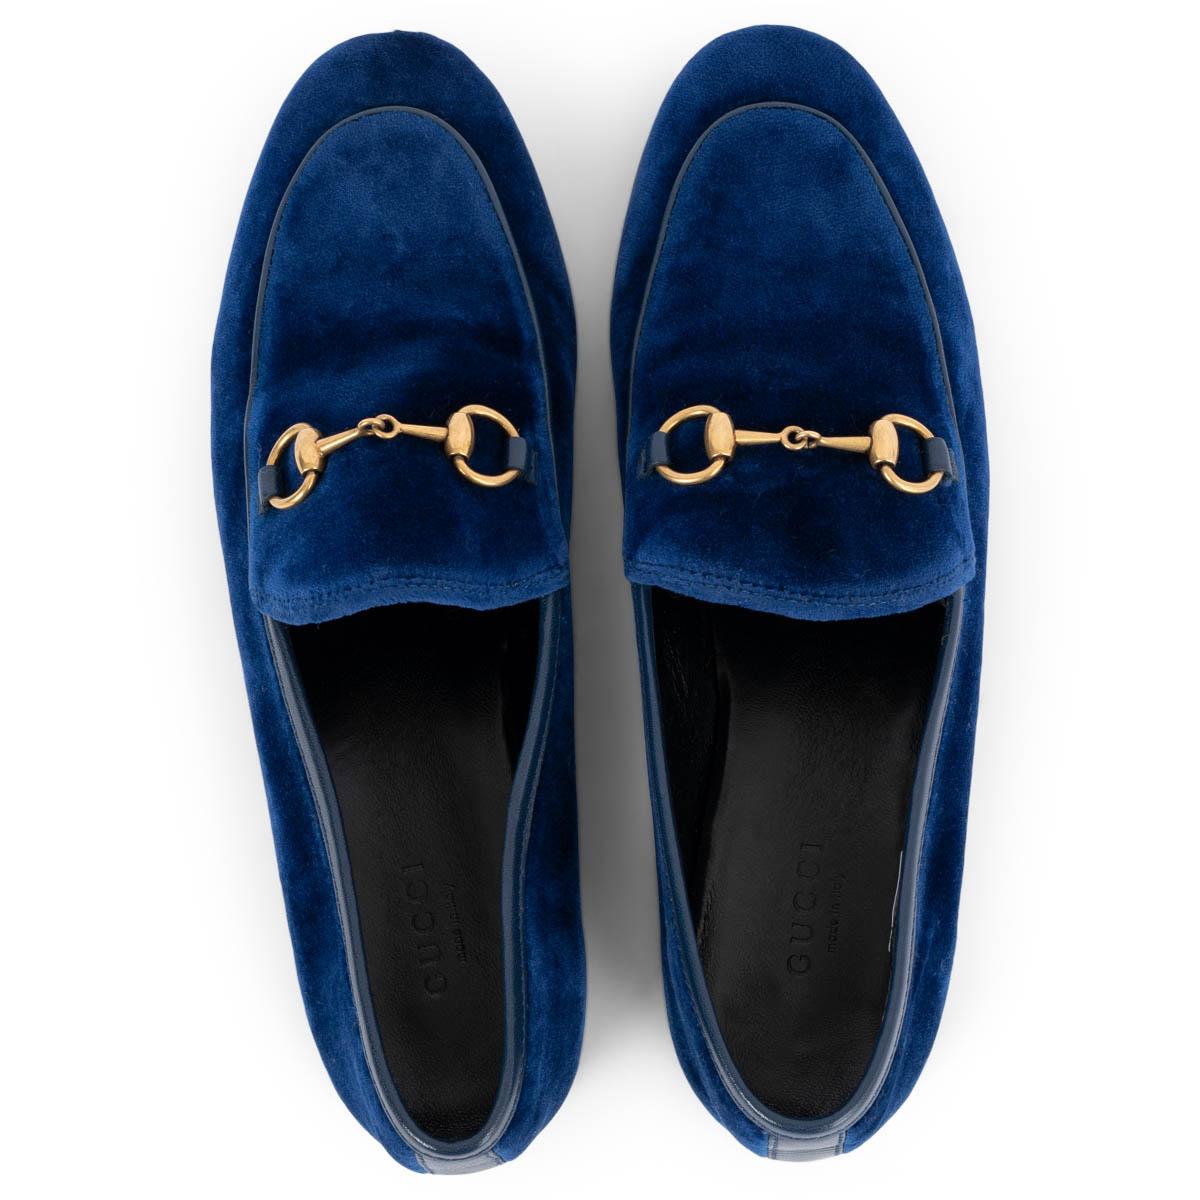 Women's GUCCI royal blue velvet JORDANN HORSEBIT Loafers Flats Shoes 37.5